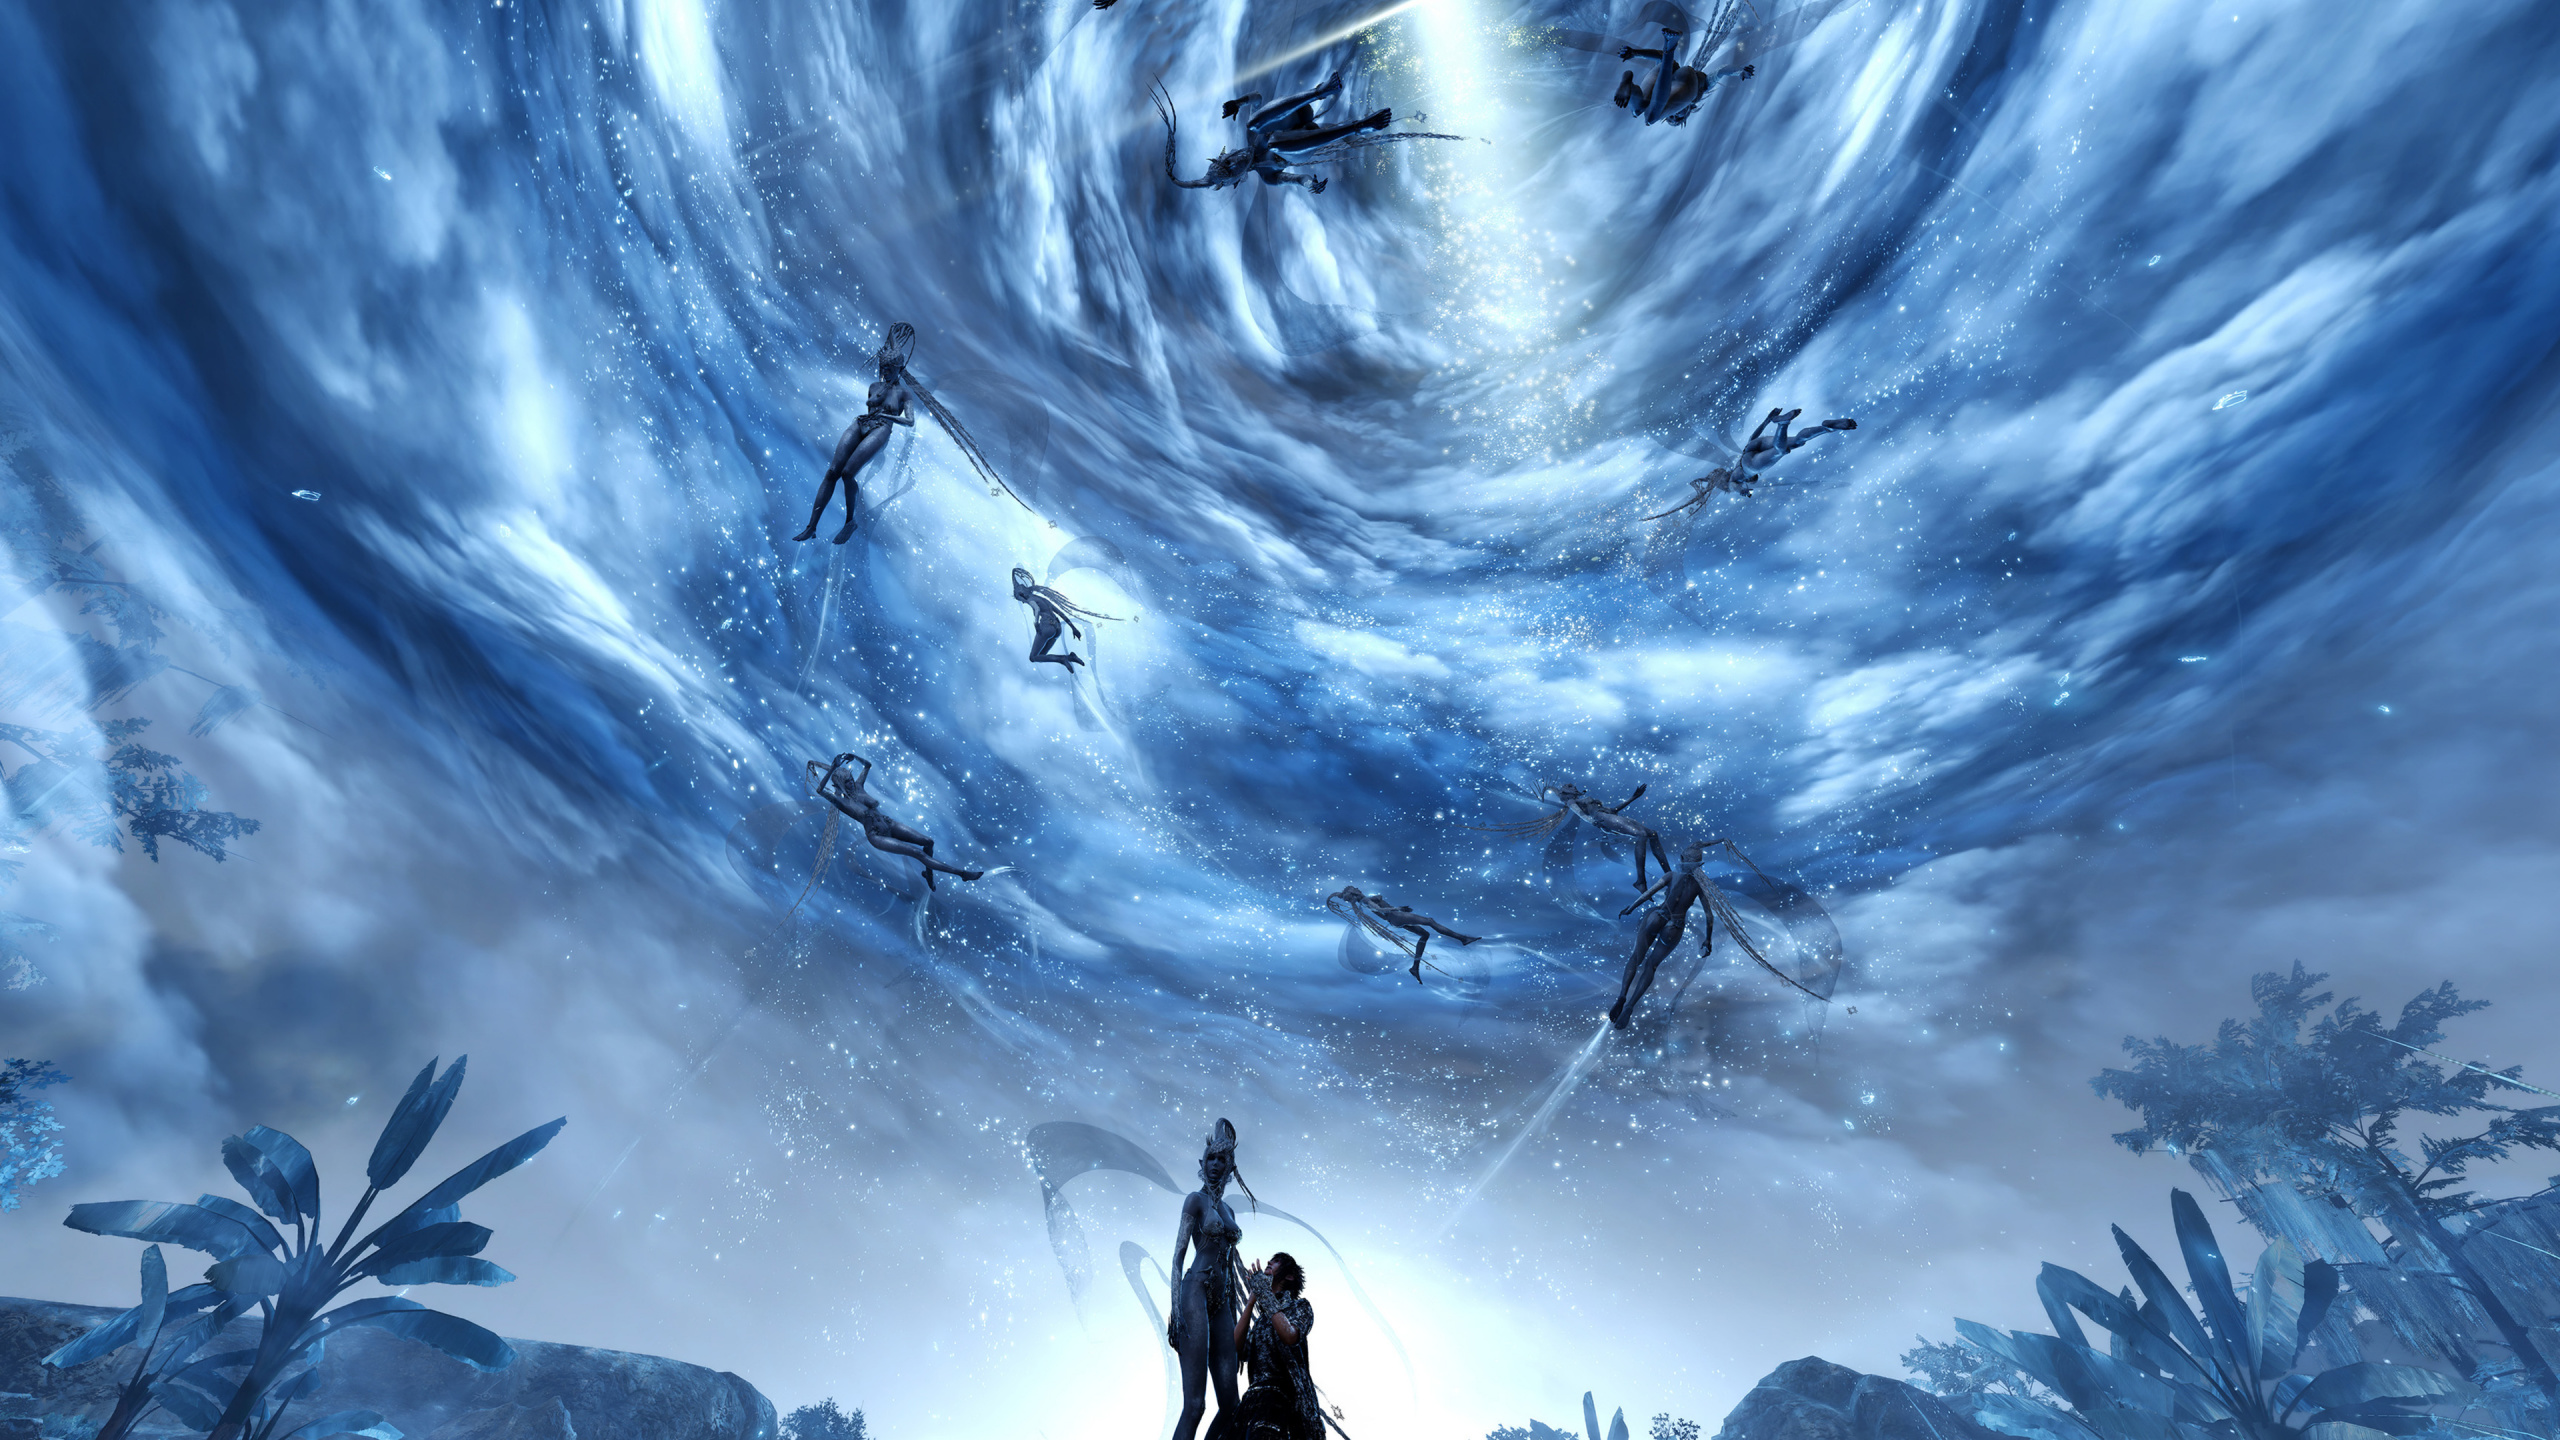 Final Fantasy Xv, Final Fantasy VII Remake, Illustration, Space, Mythology. Wallpaper in 2560x1440 Resolution